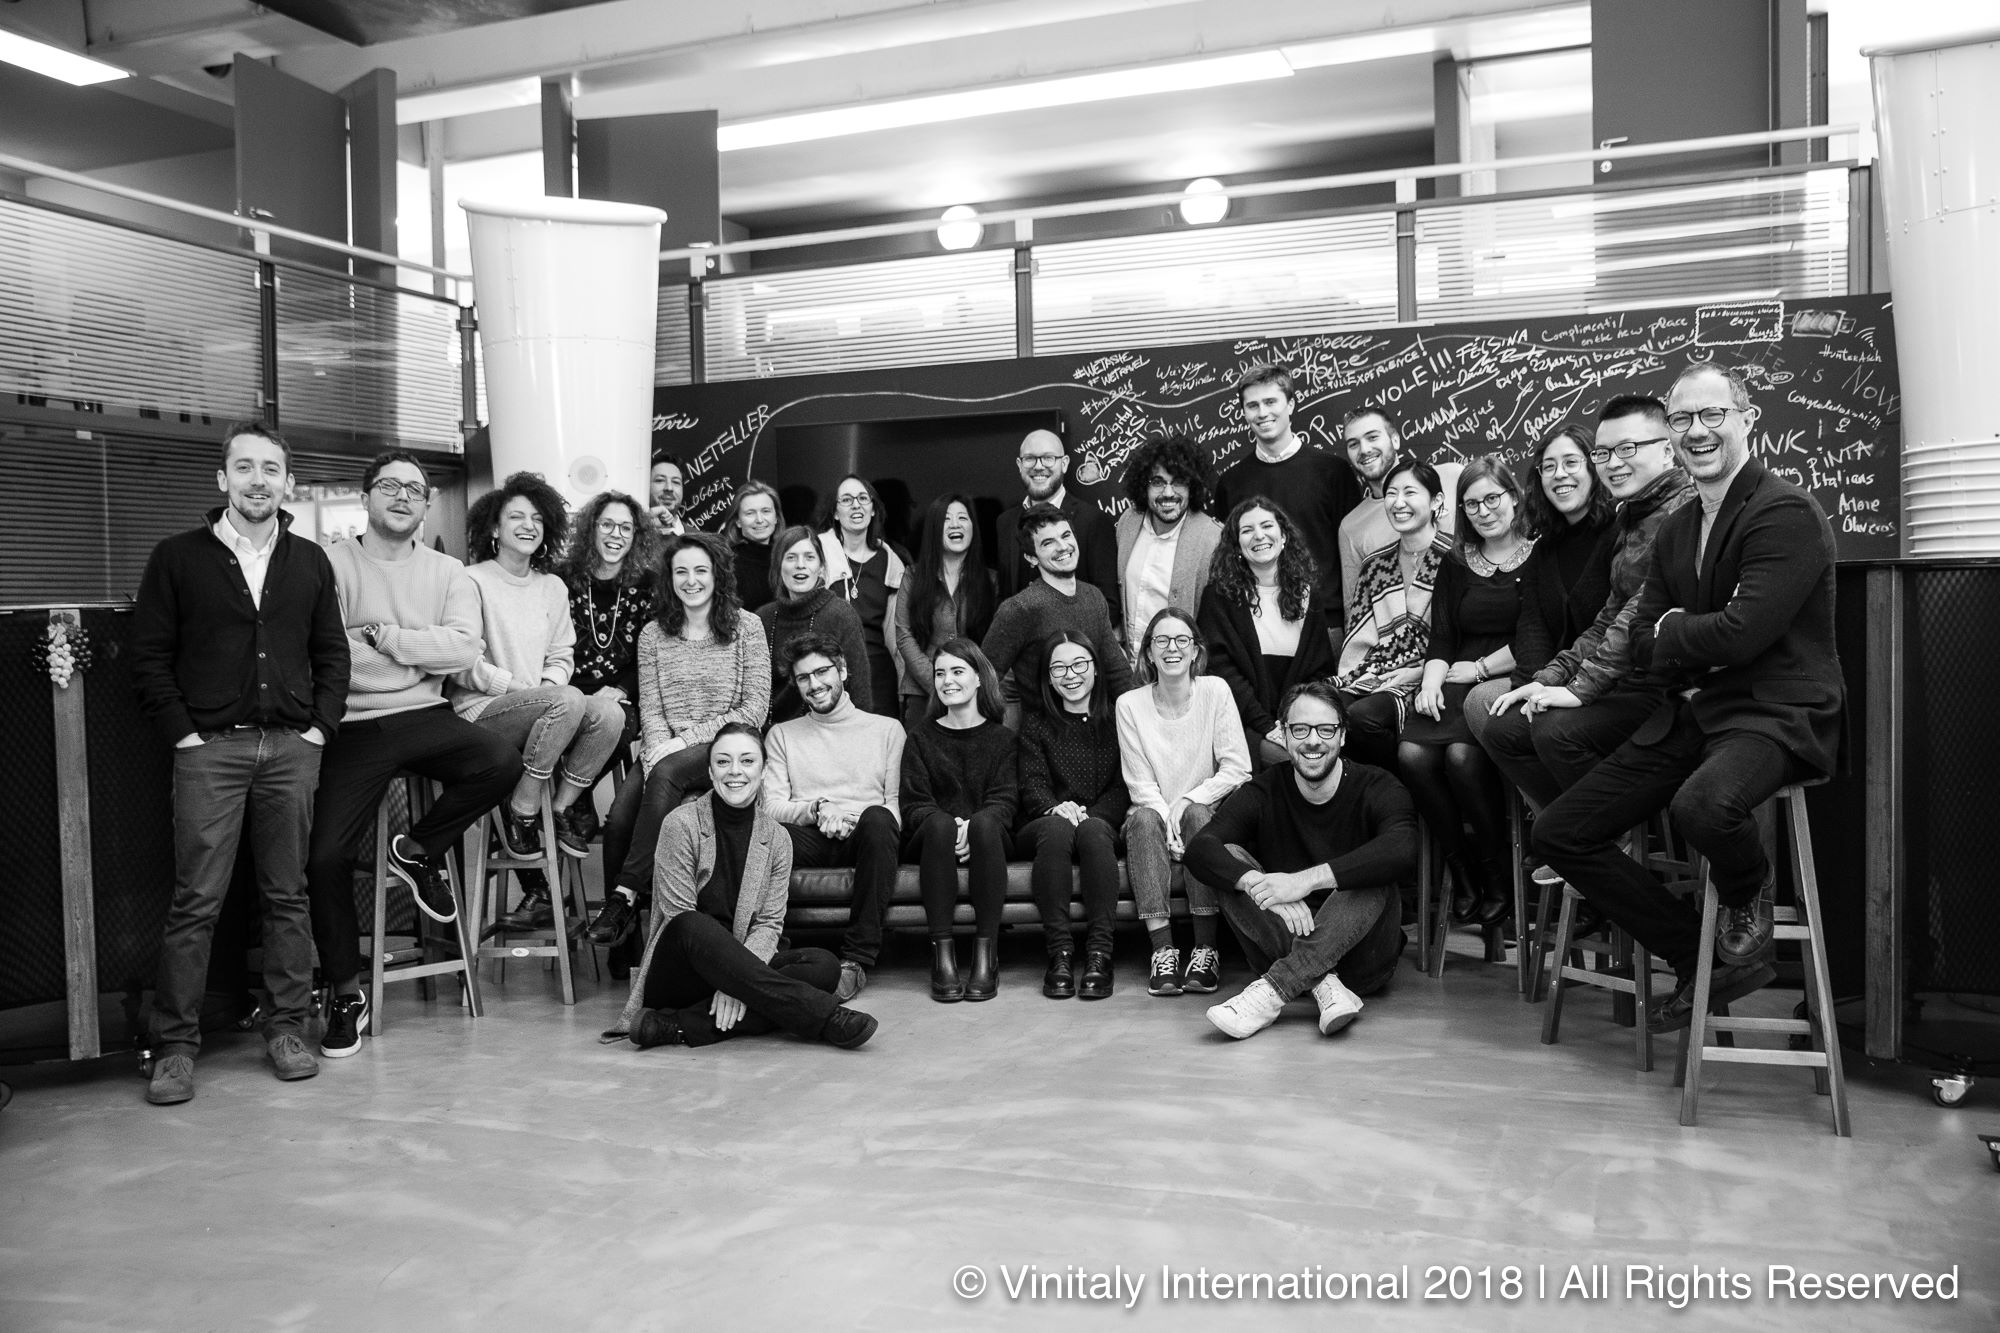 Vinitaly International staff photograph 2018